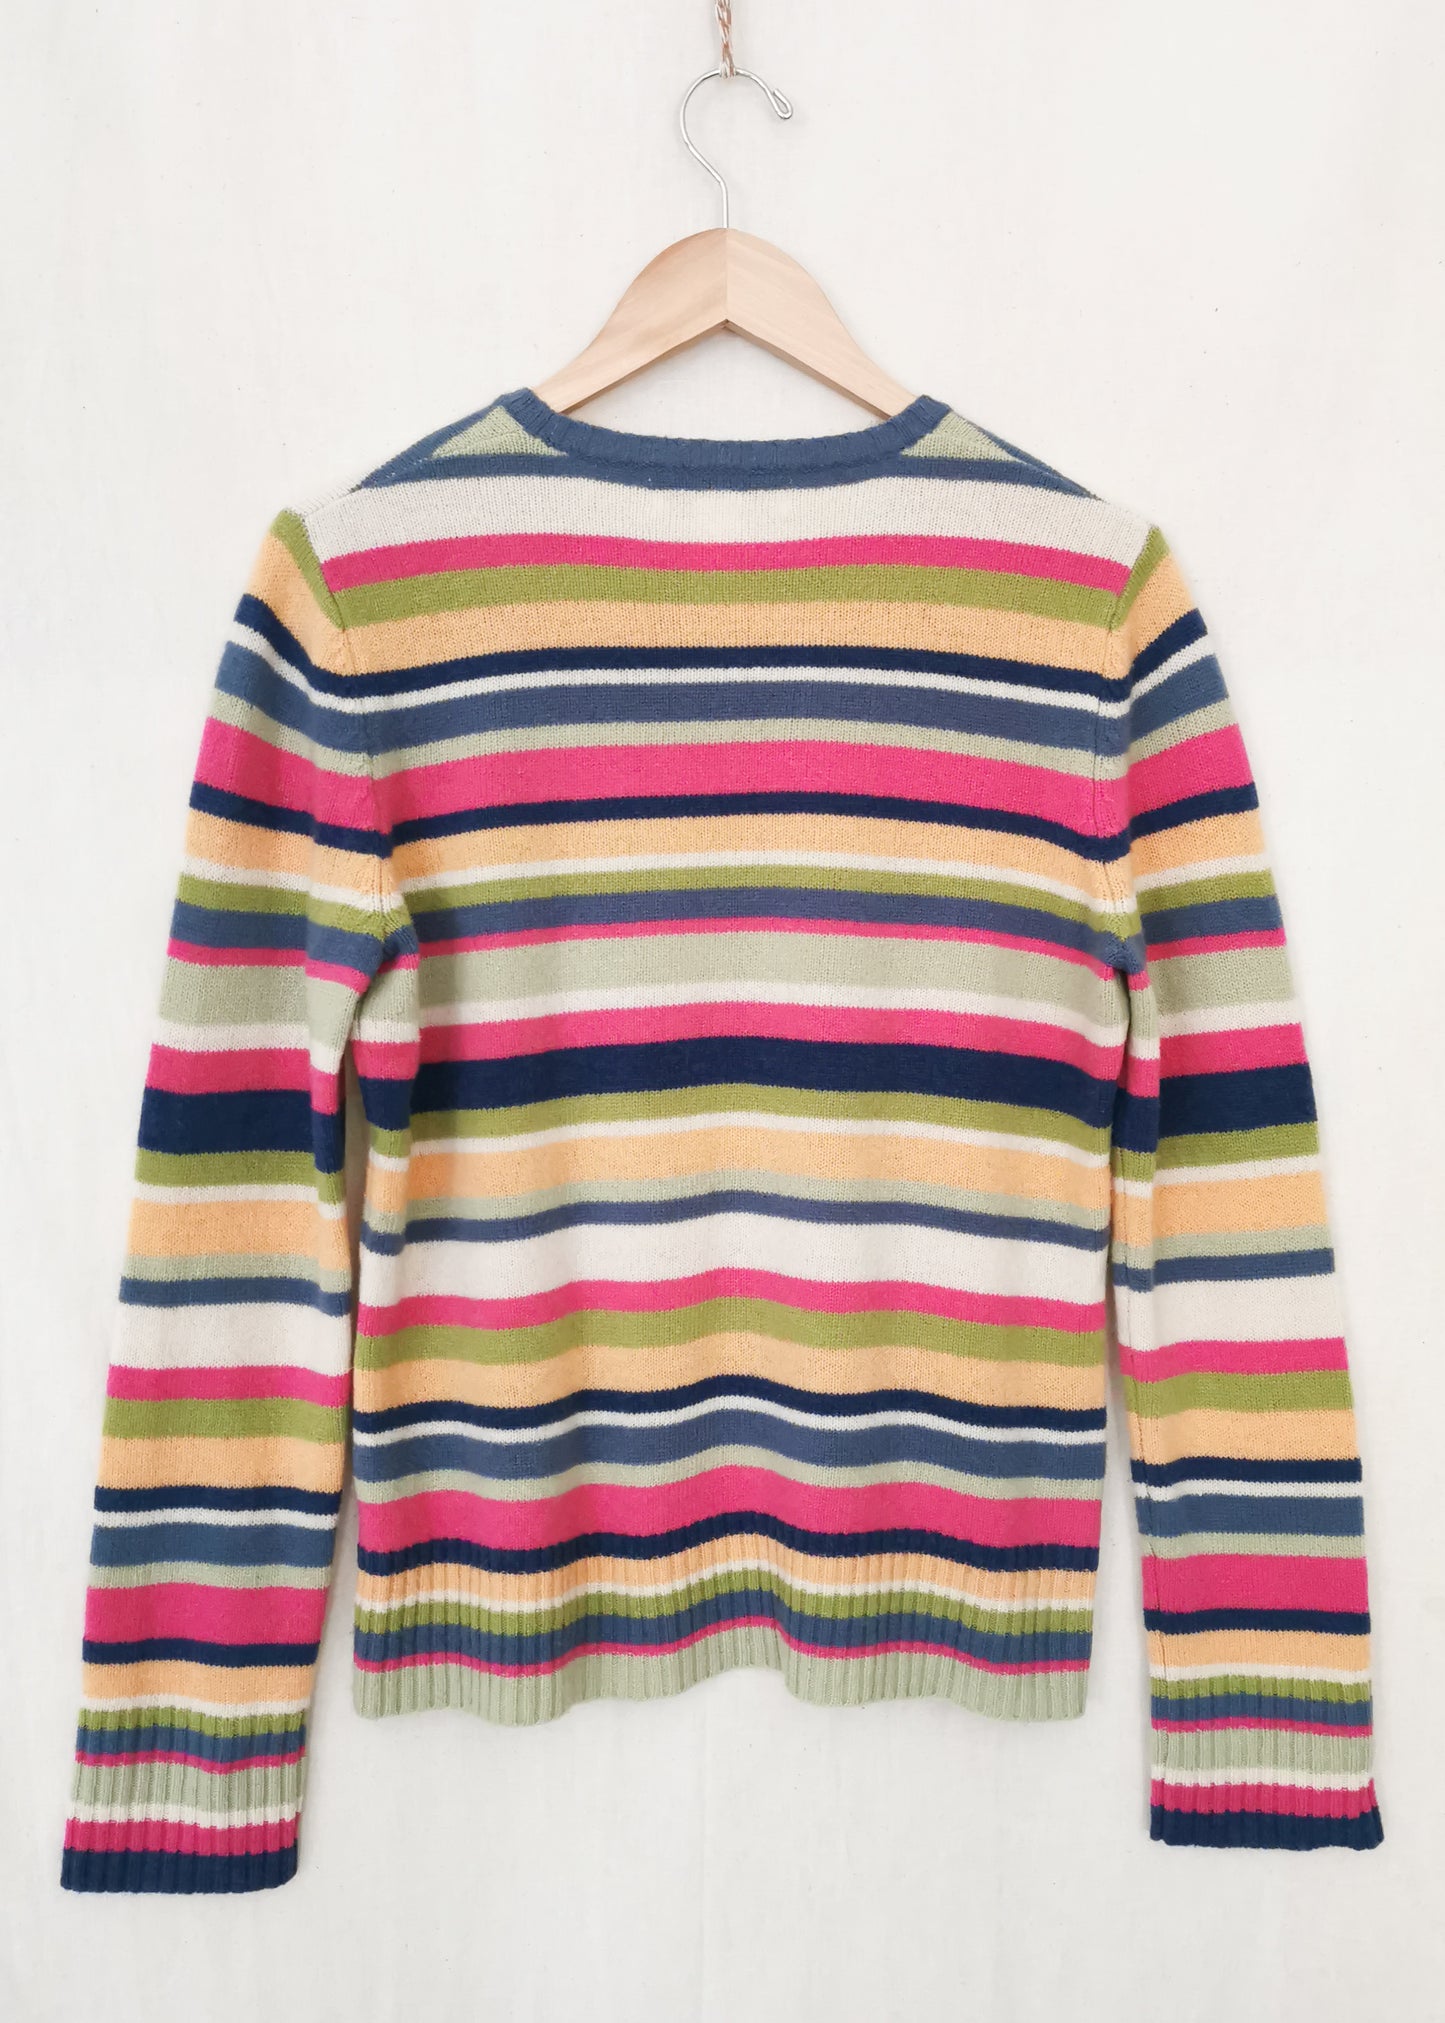 Jones New York Sport Wool Sweater (M)